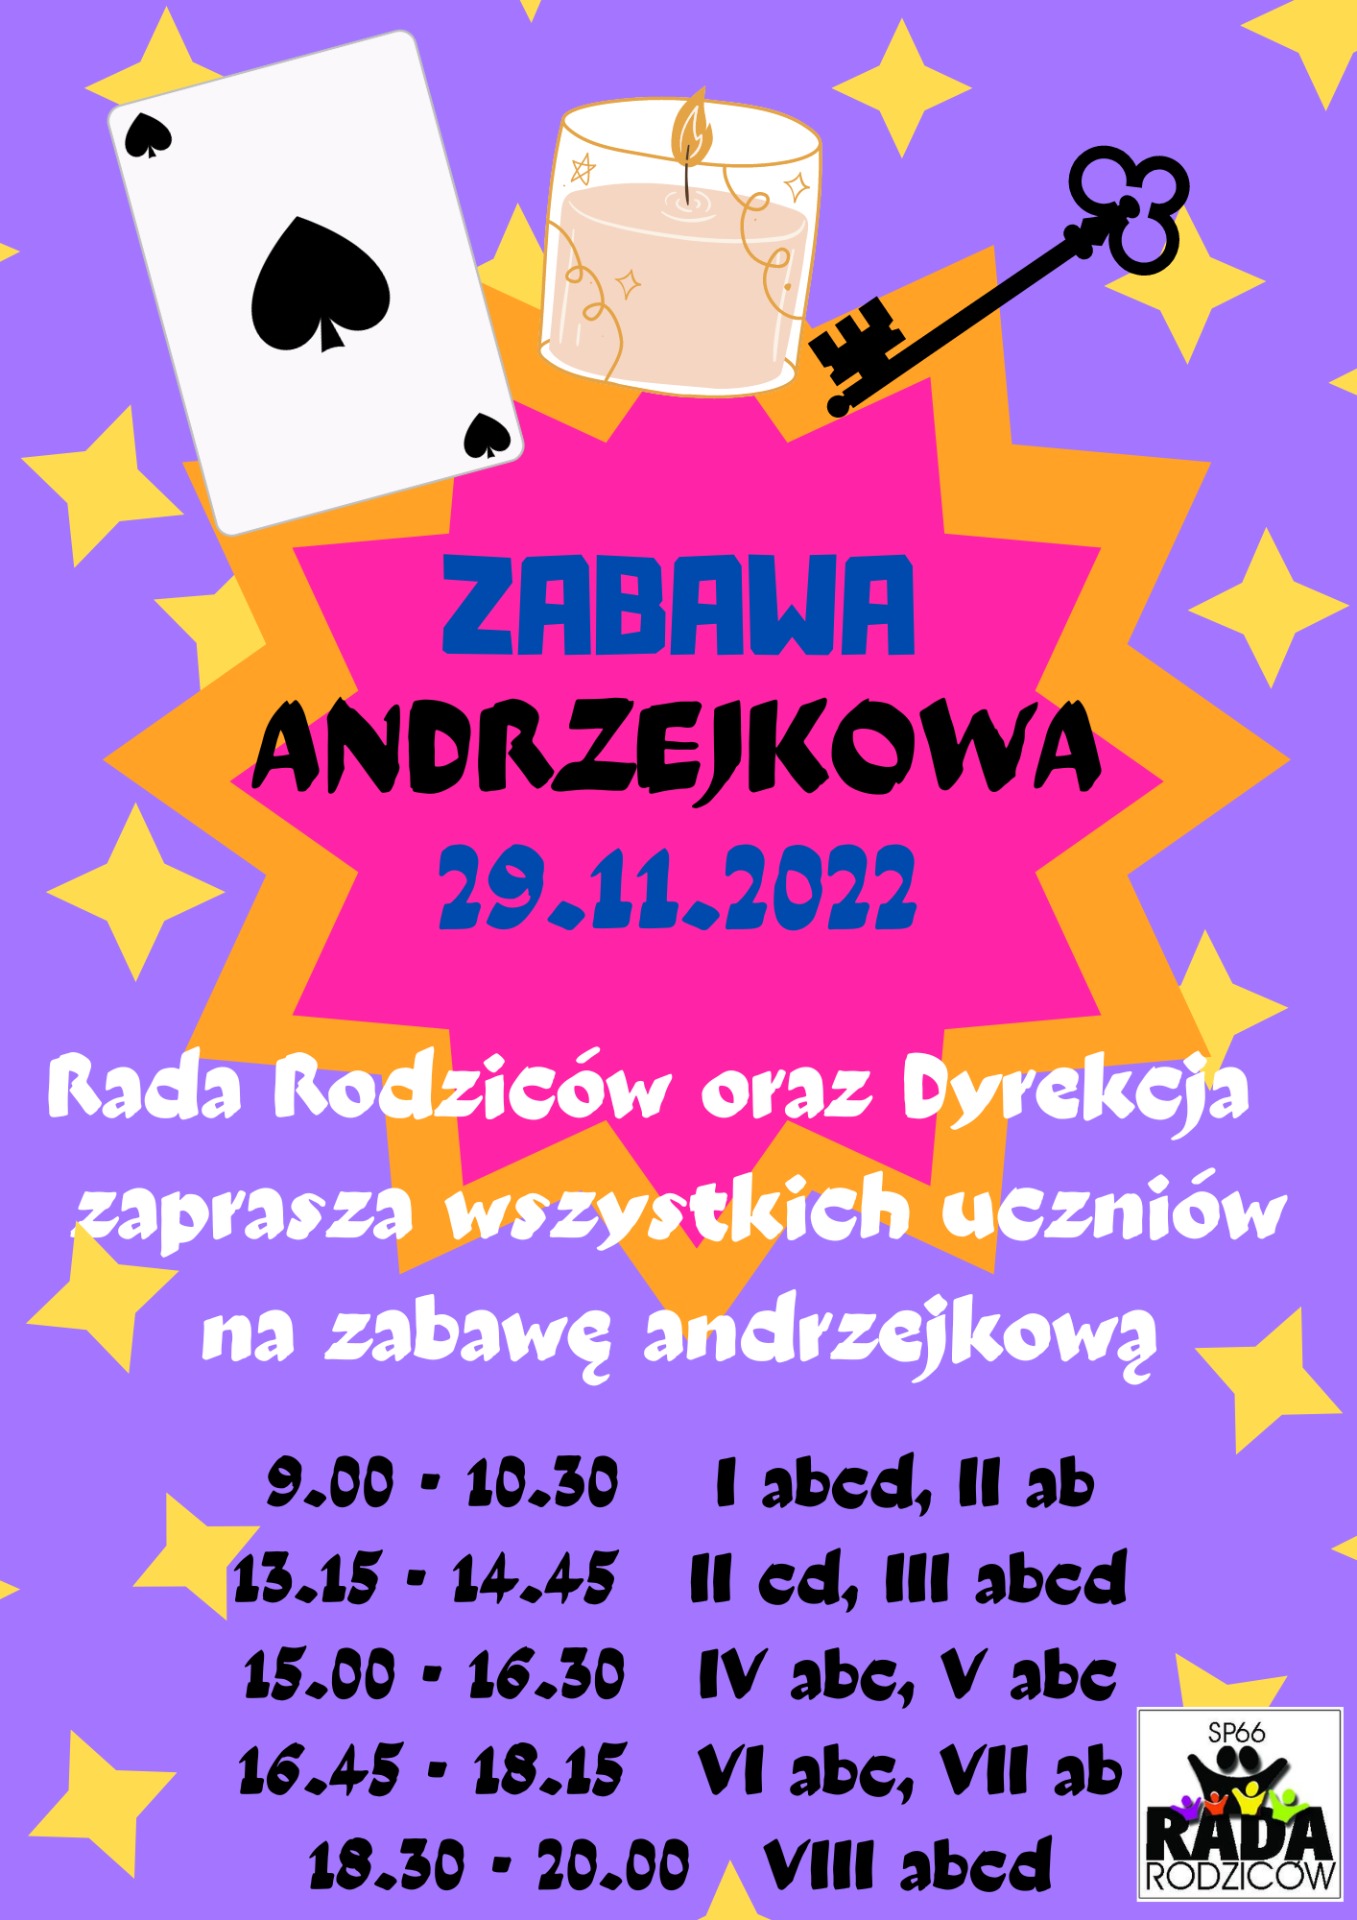 Zabawa Andrzejkowa 29.11.2022 r. - Obrazek 1